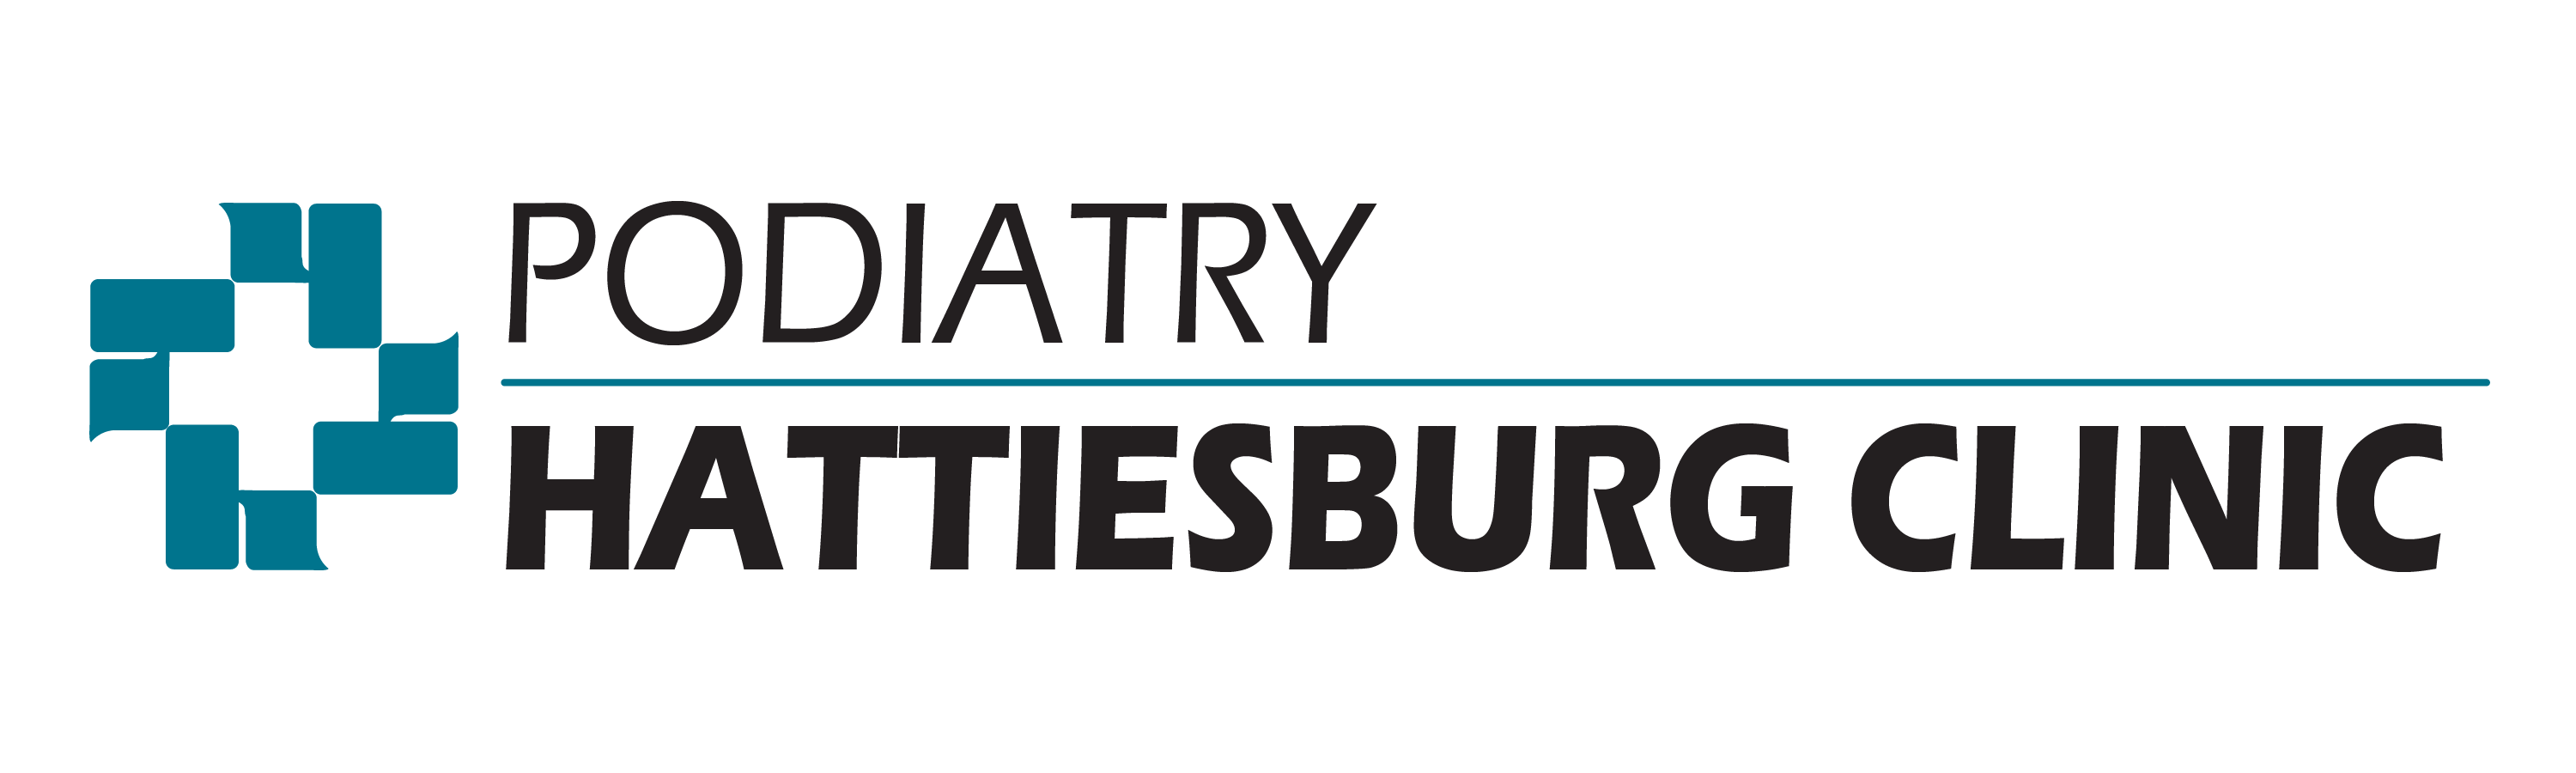 Podiatry logo